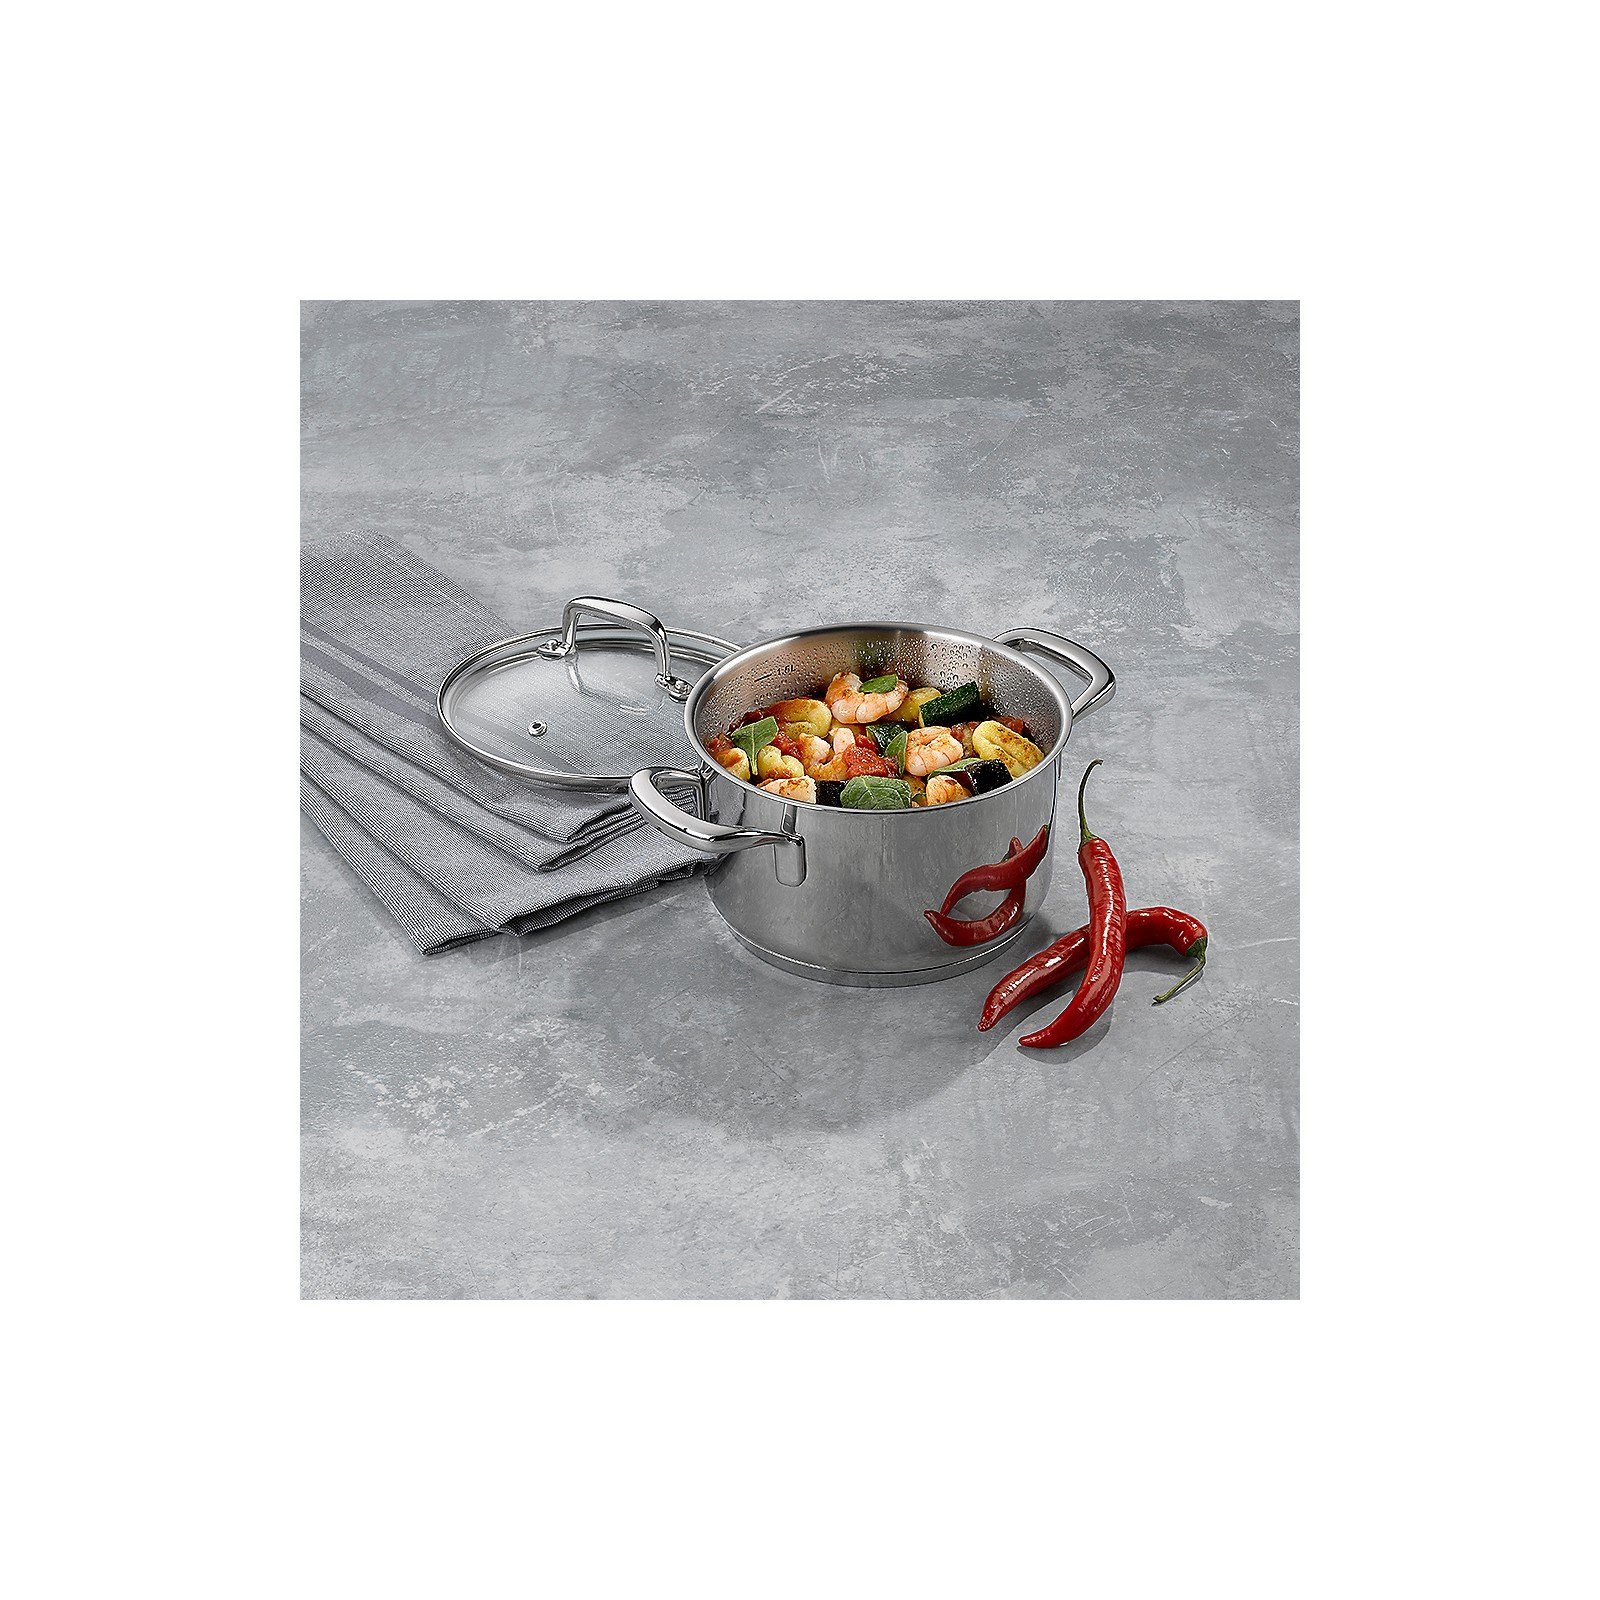 Auslassventil, 180°C 18, Edelstahl Allherdboden, 10, Innenskala, mit Flavoria, Glasdeckel Kochtopf kela bis